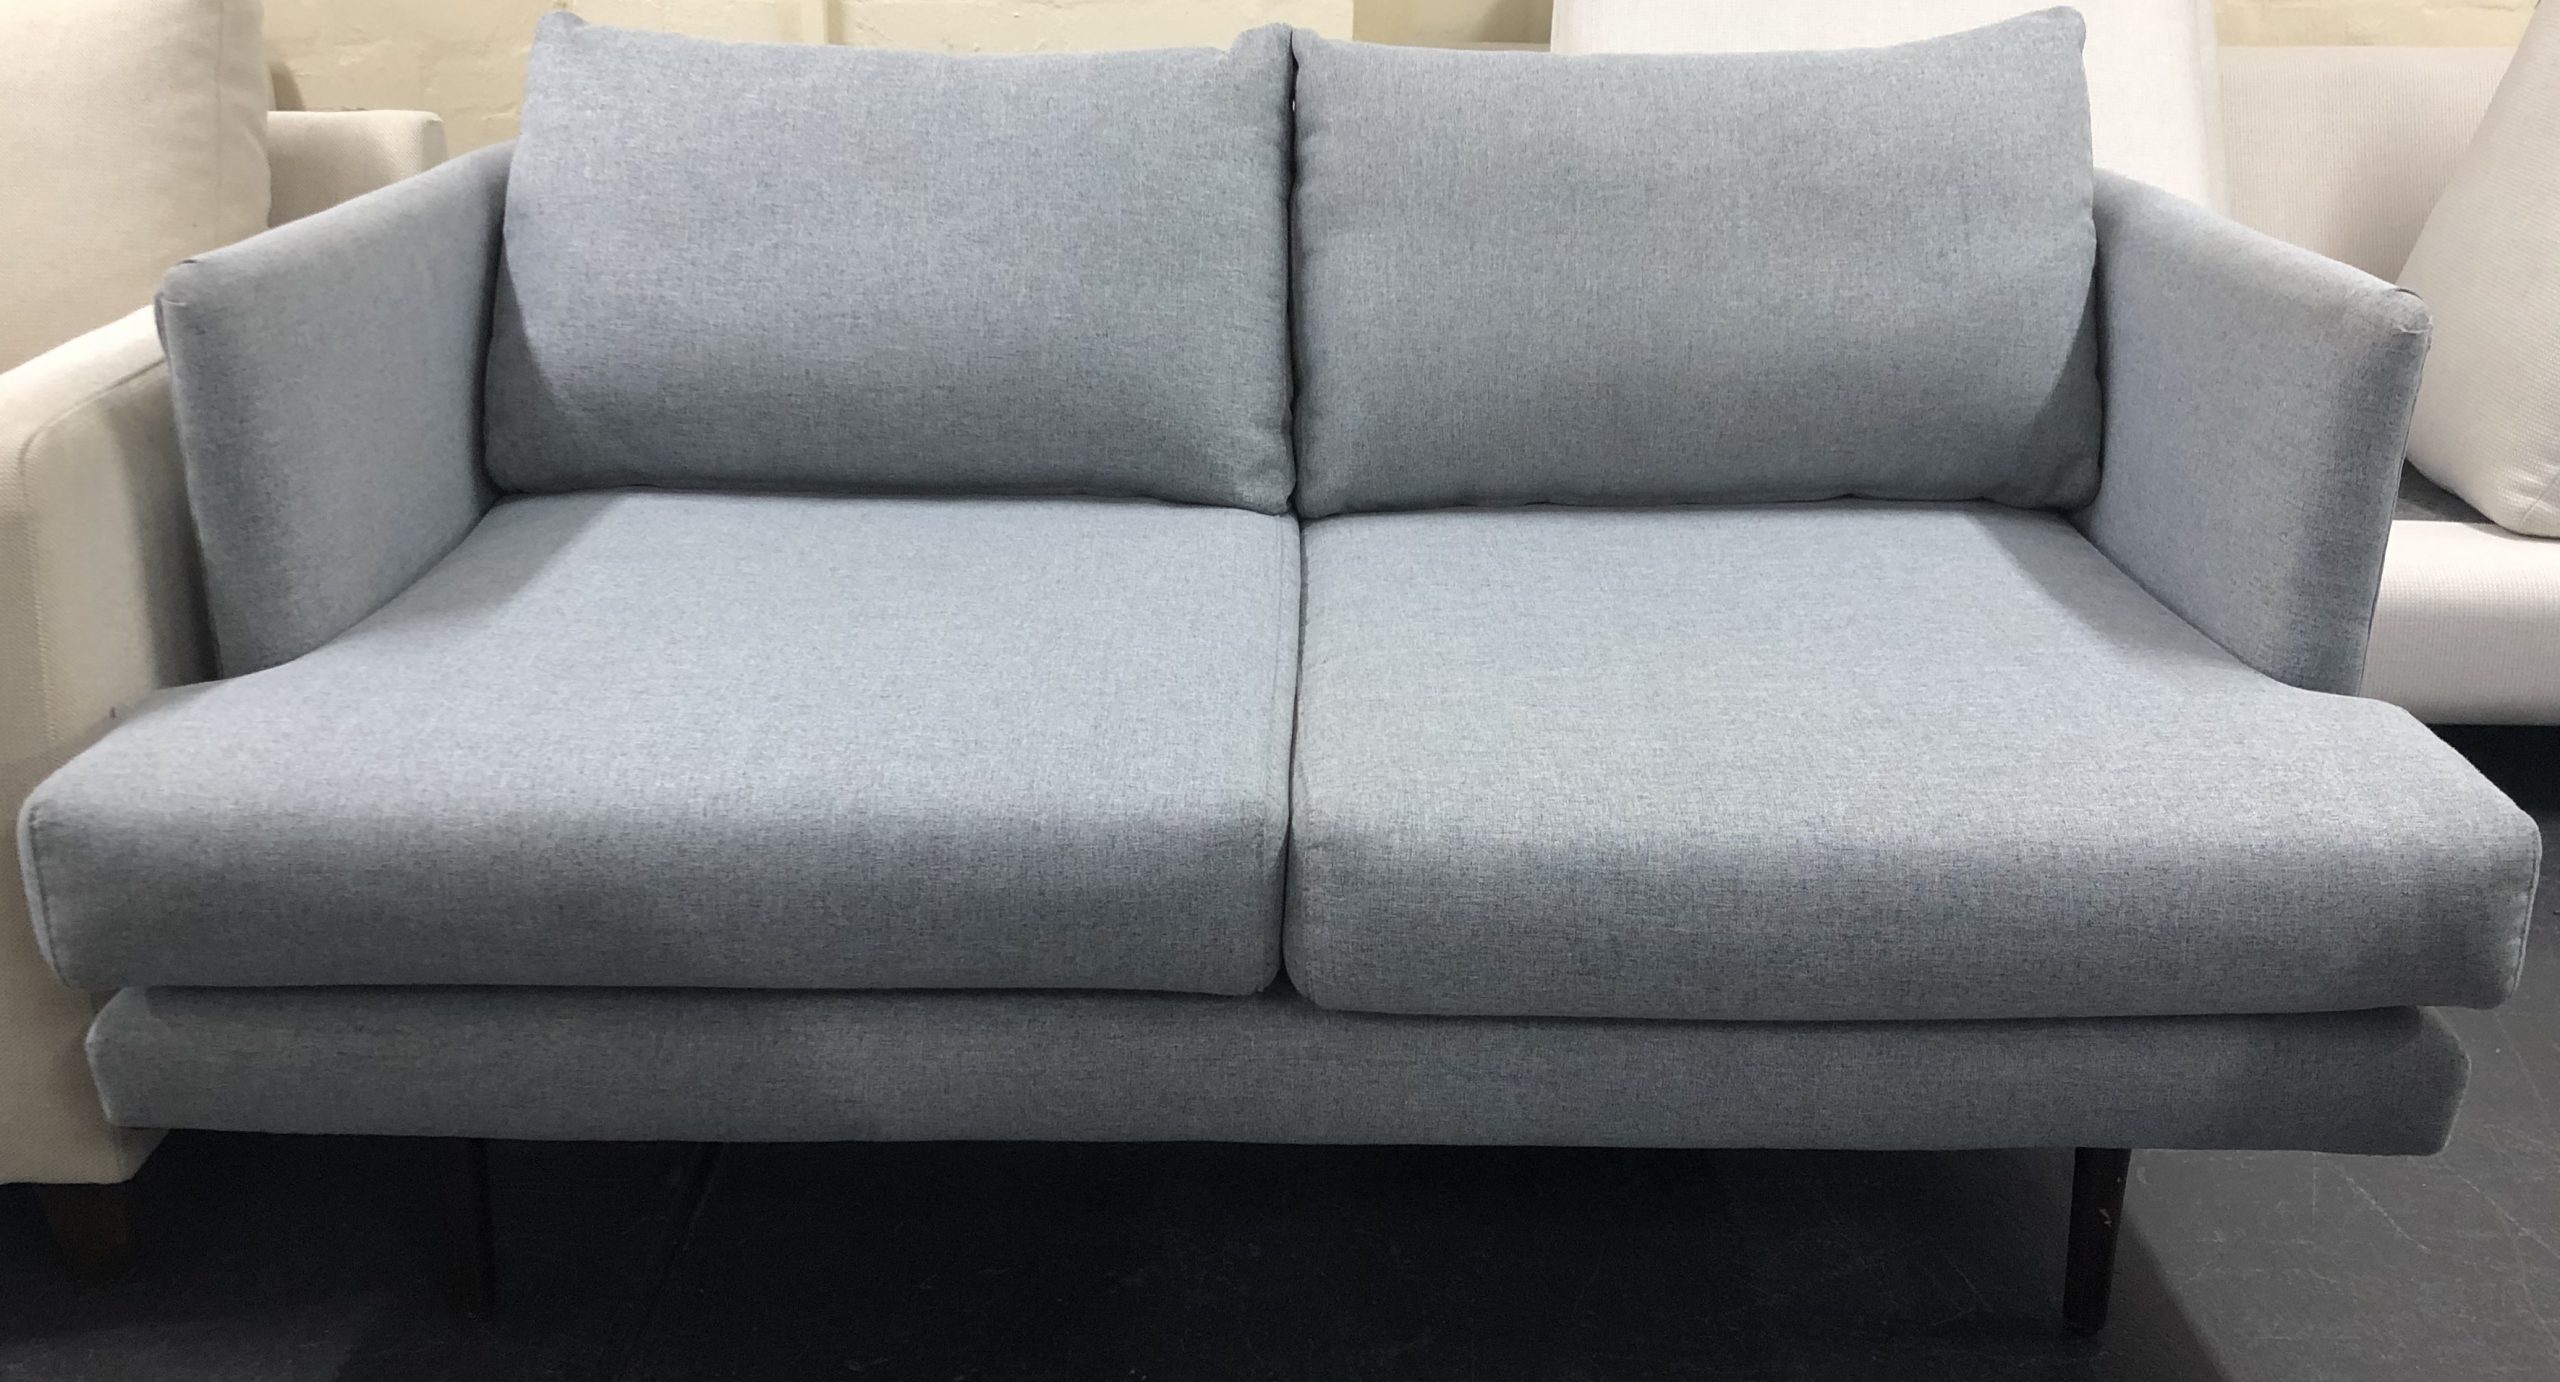 Sofa 2 Seater Reagan Grey W1450 x D900 x H690mm